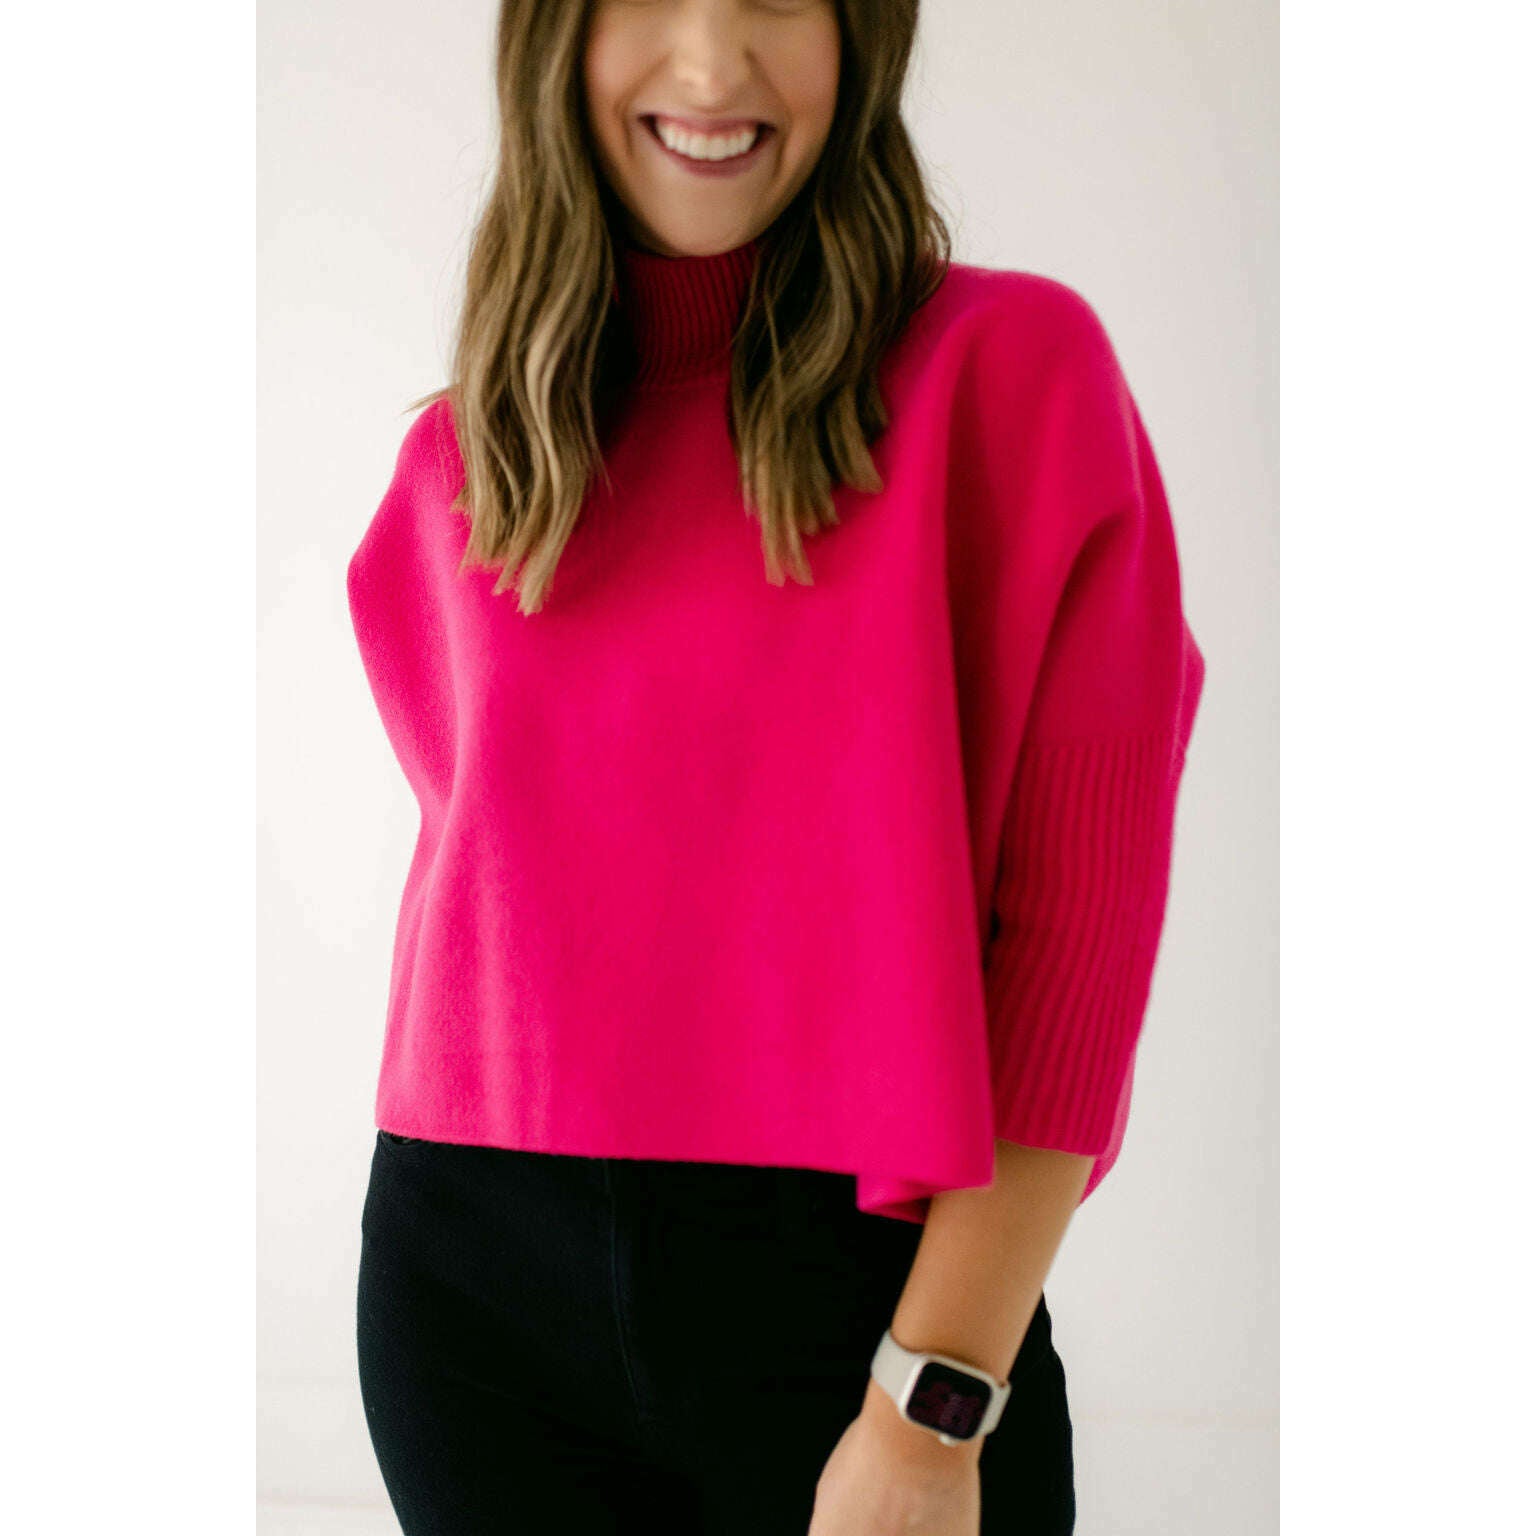 8.28 Boutique:Kerisma Knits,Kerisma Knits Aja Sweater in Super Pink,Sweaters